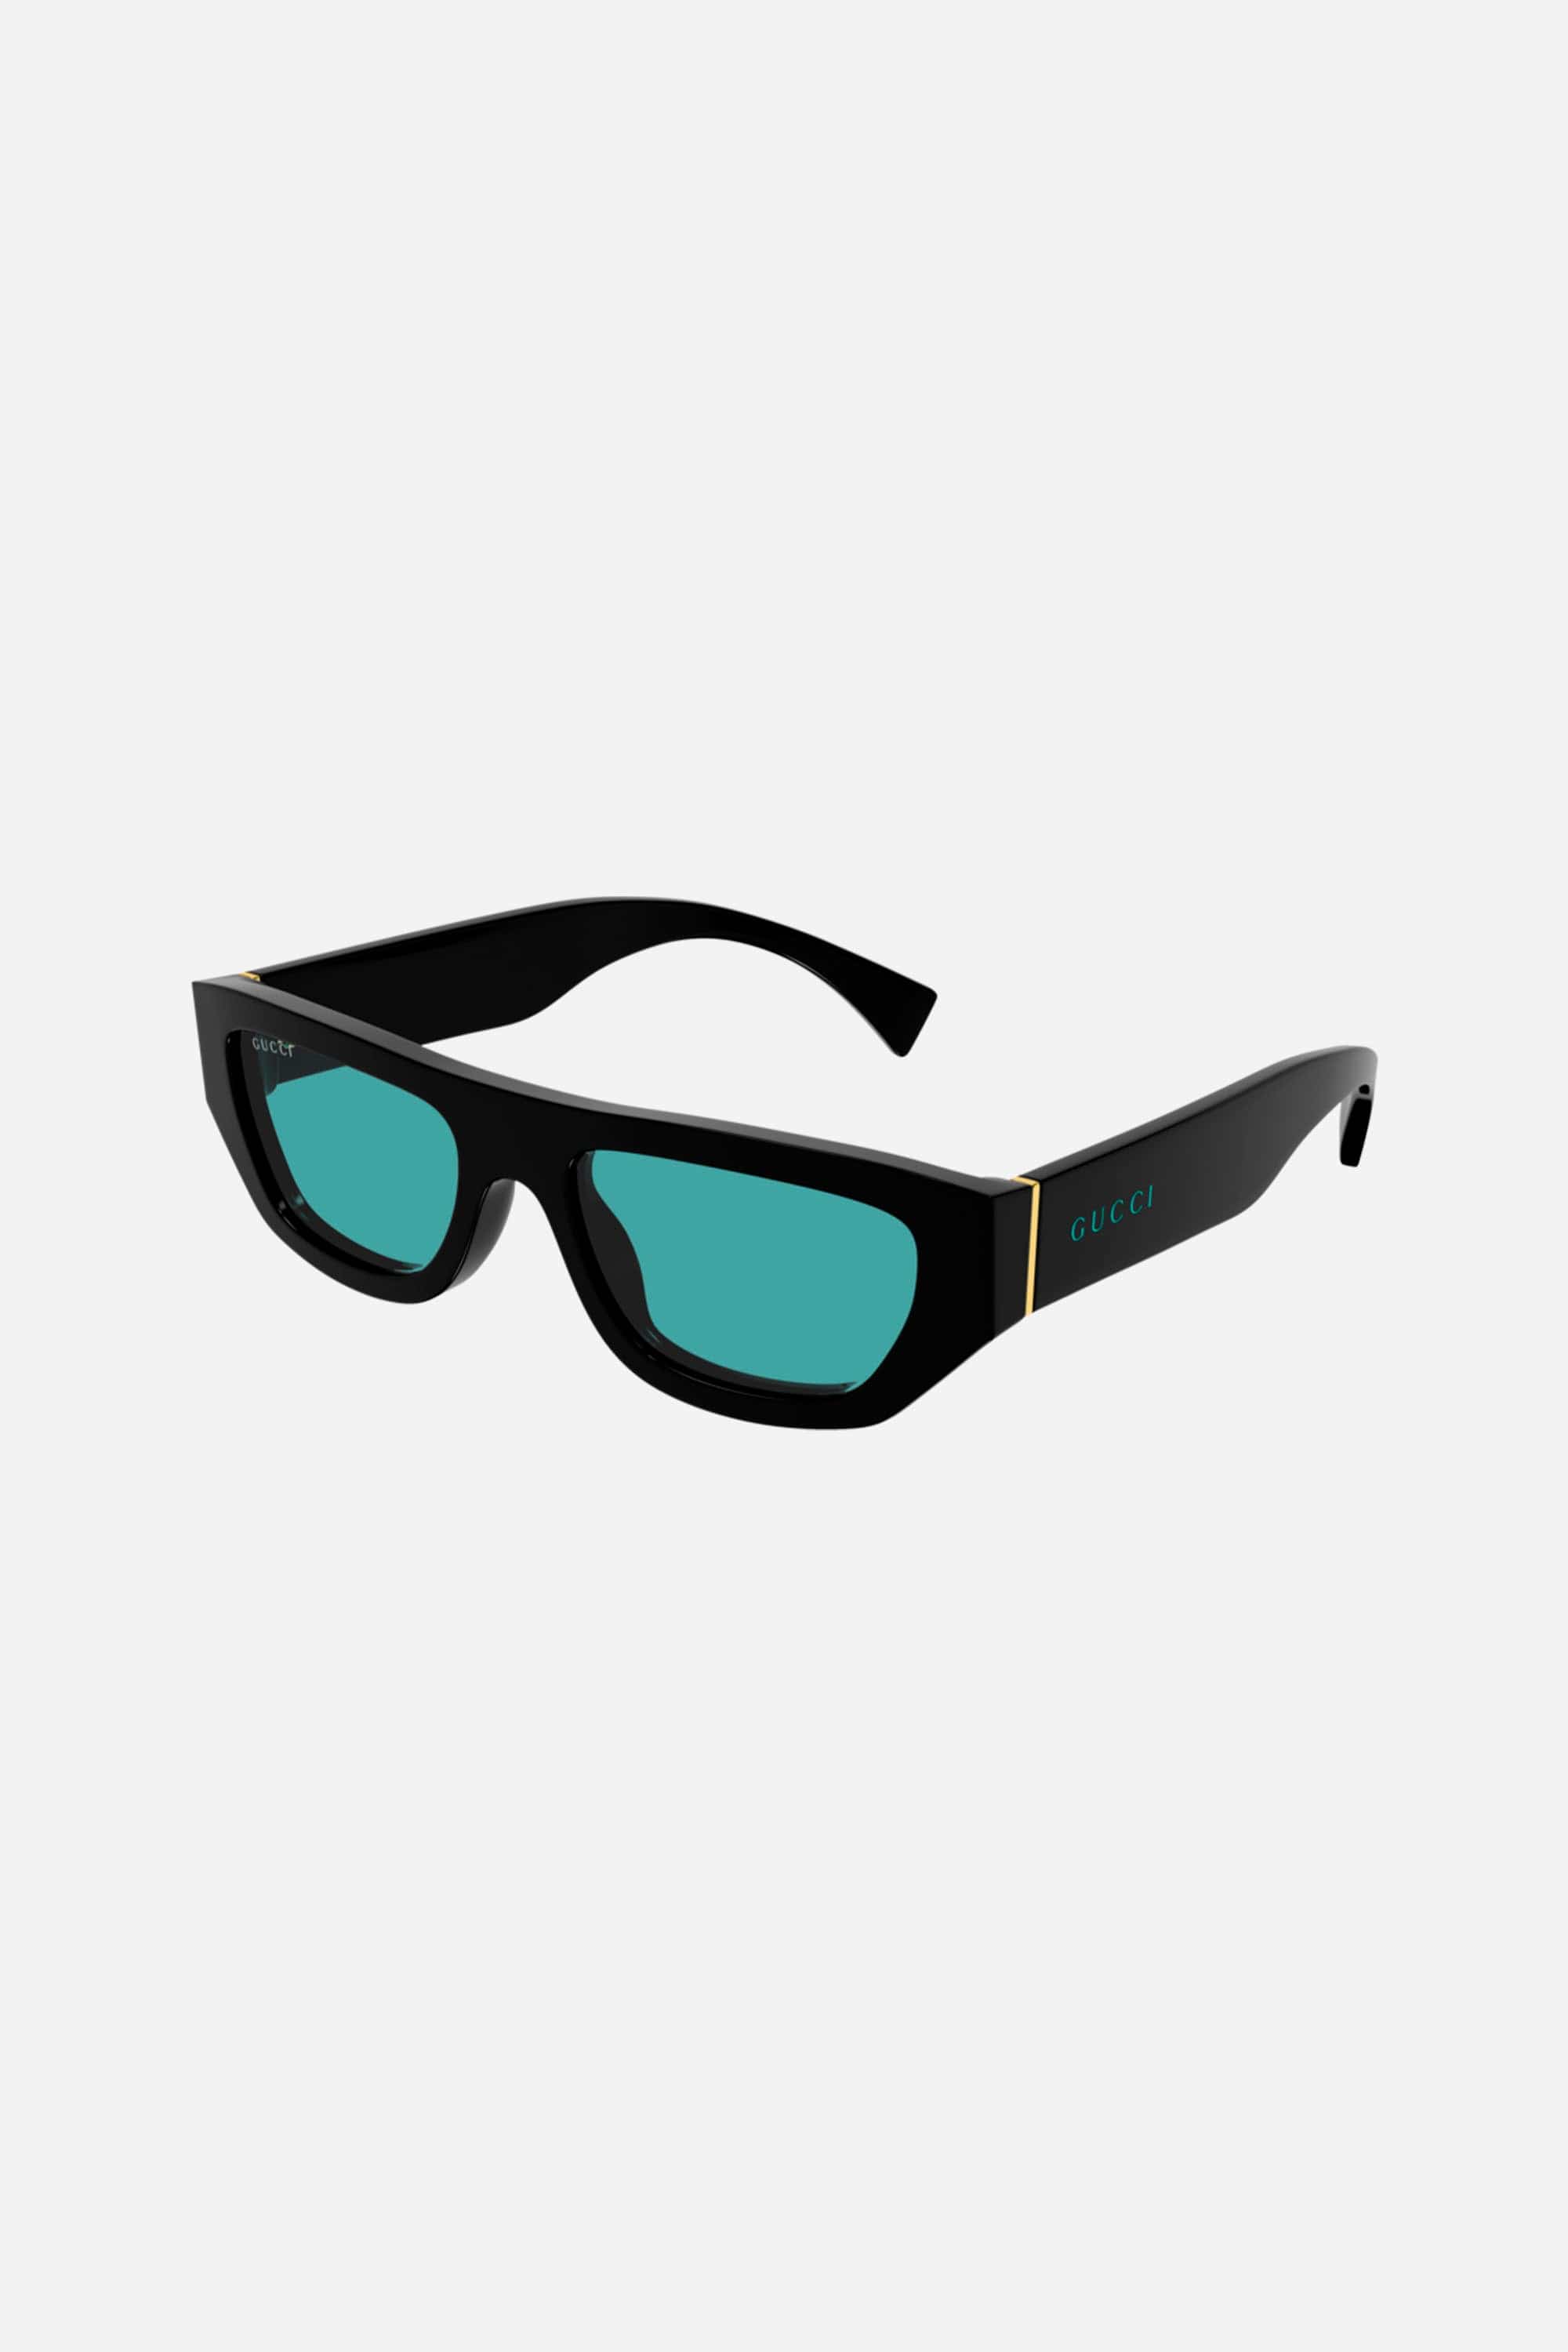 PRE ORDER Avail. 15th Jan 23-Gucci flat top black and blue sunglasses - Eyewear Club